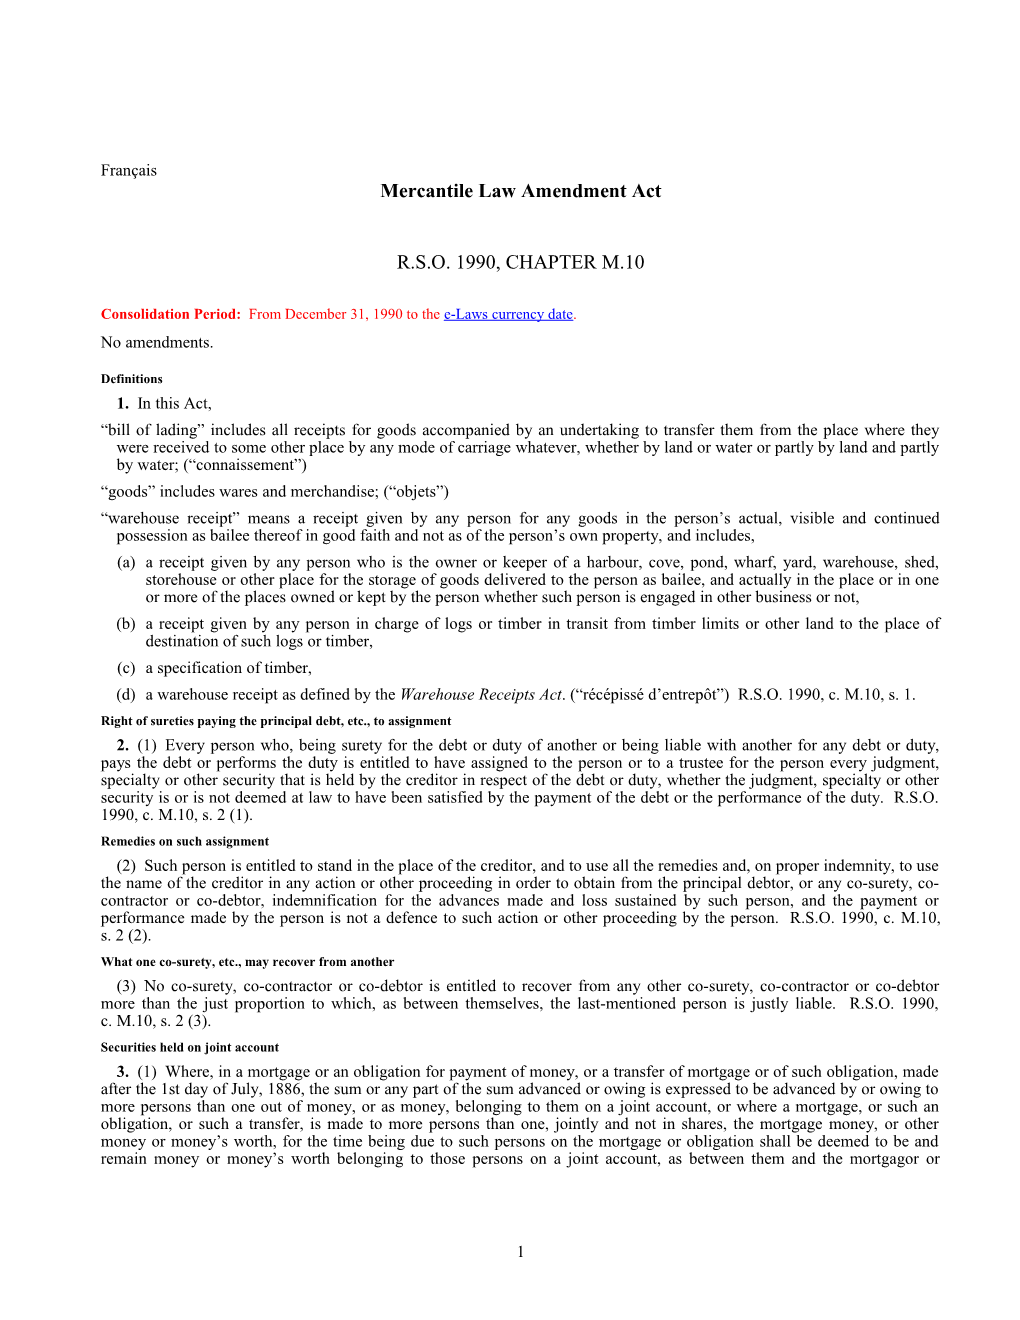 Mercantile Law Amendment Act, R.S.O. 1990, C. M.10